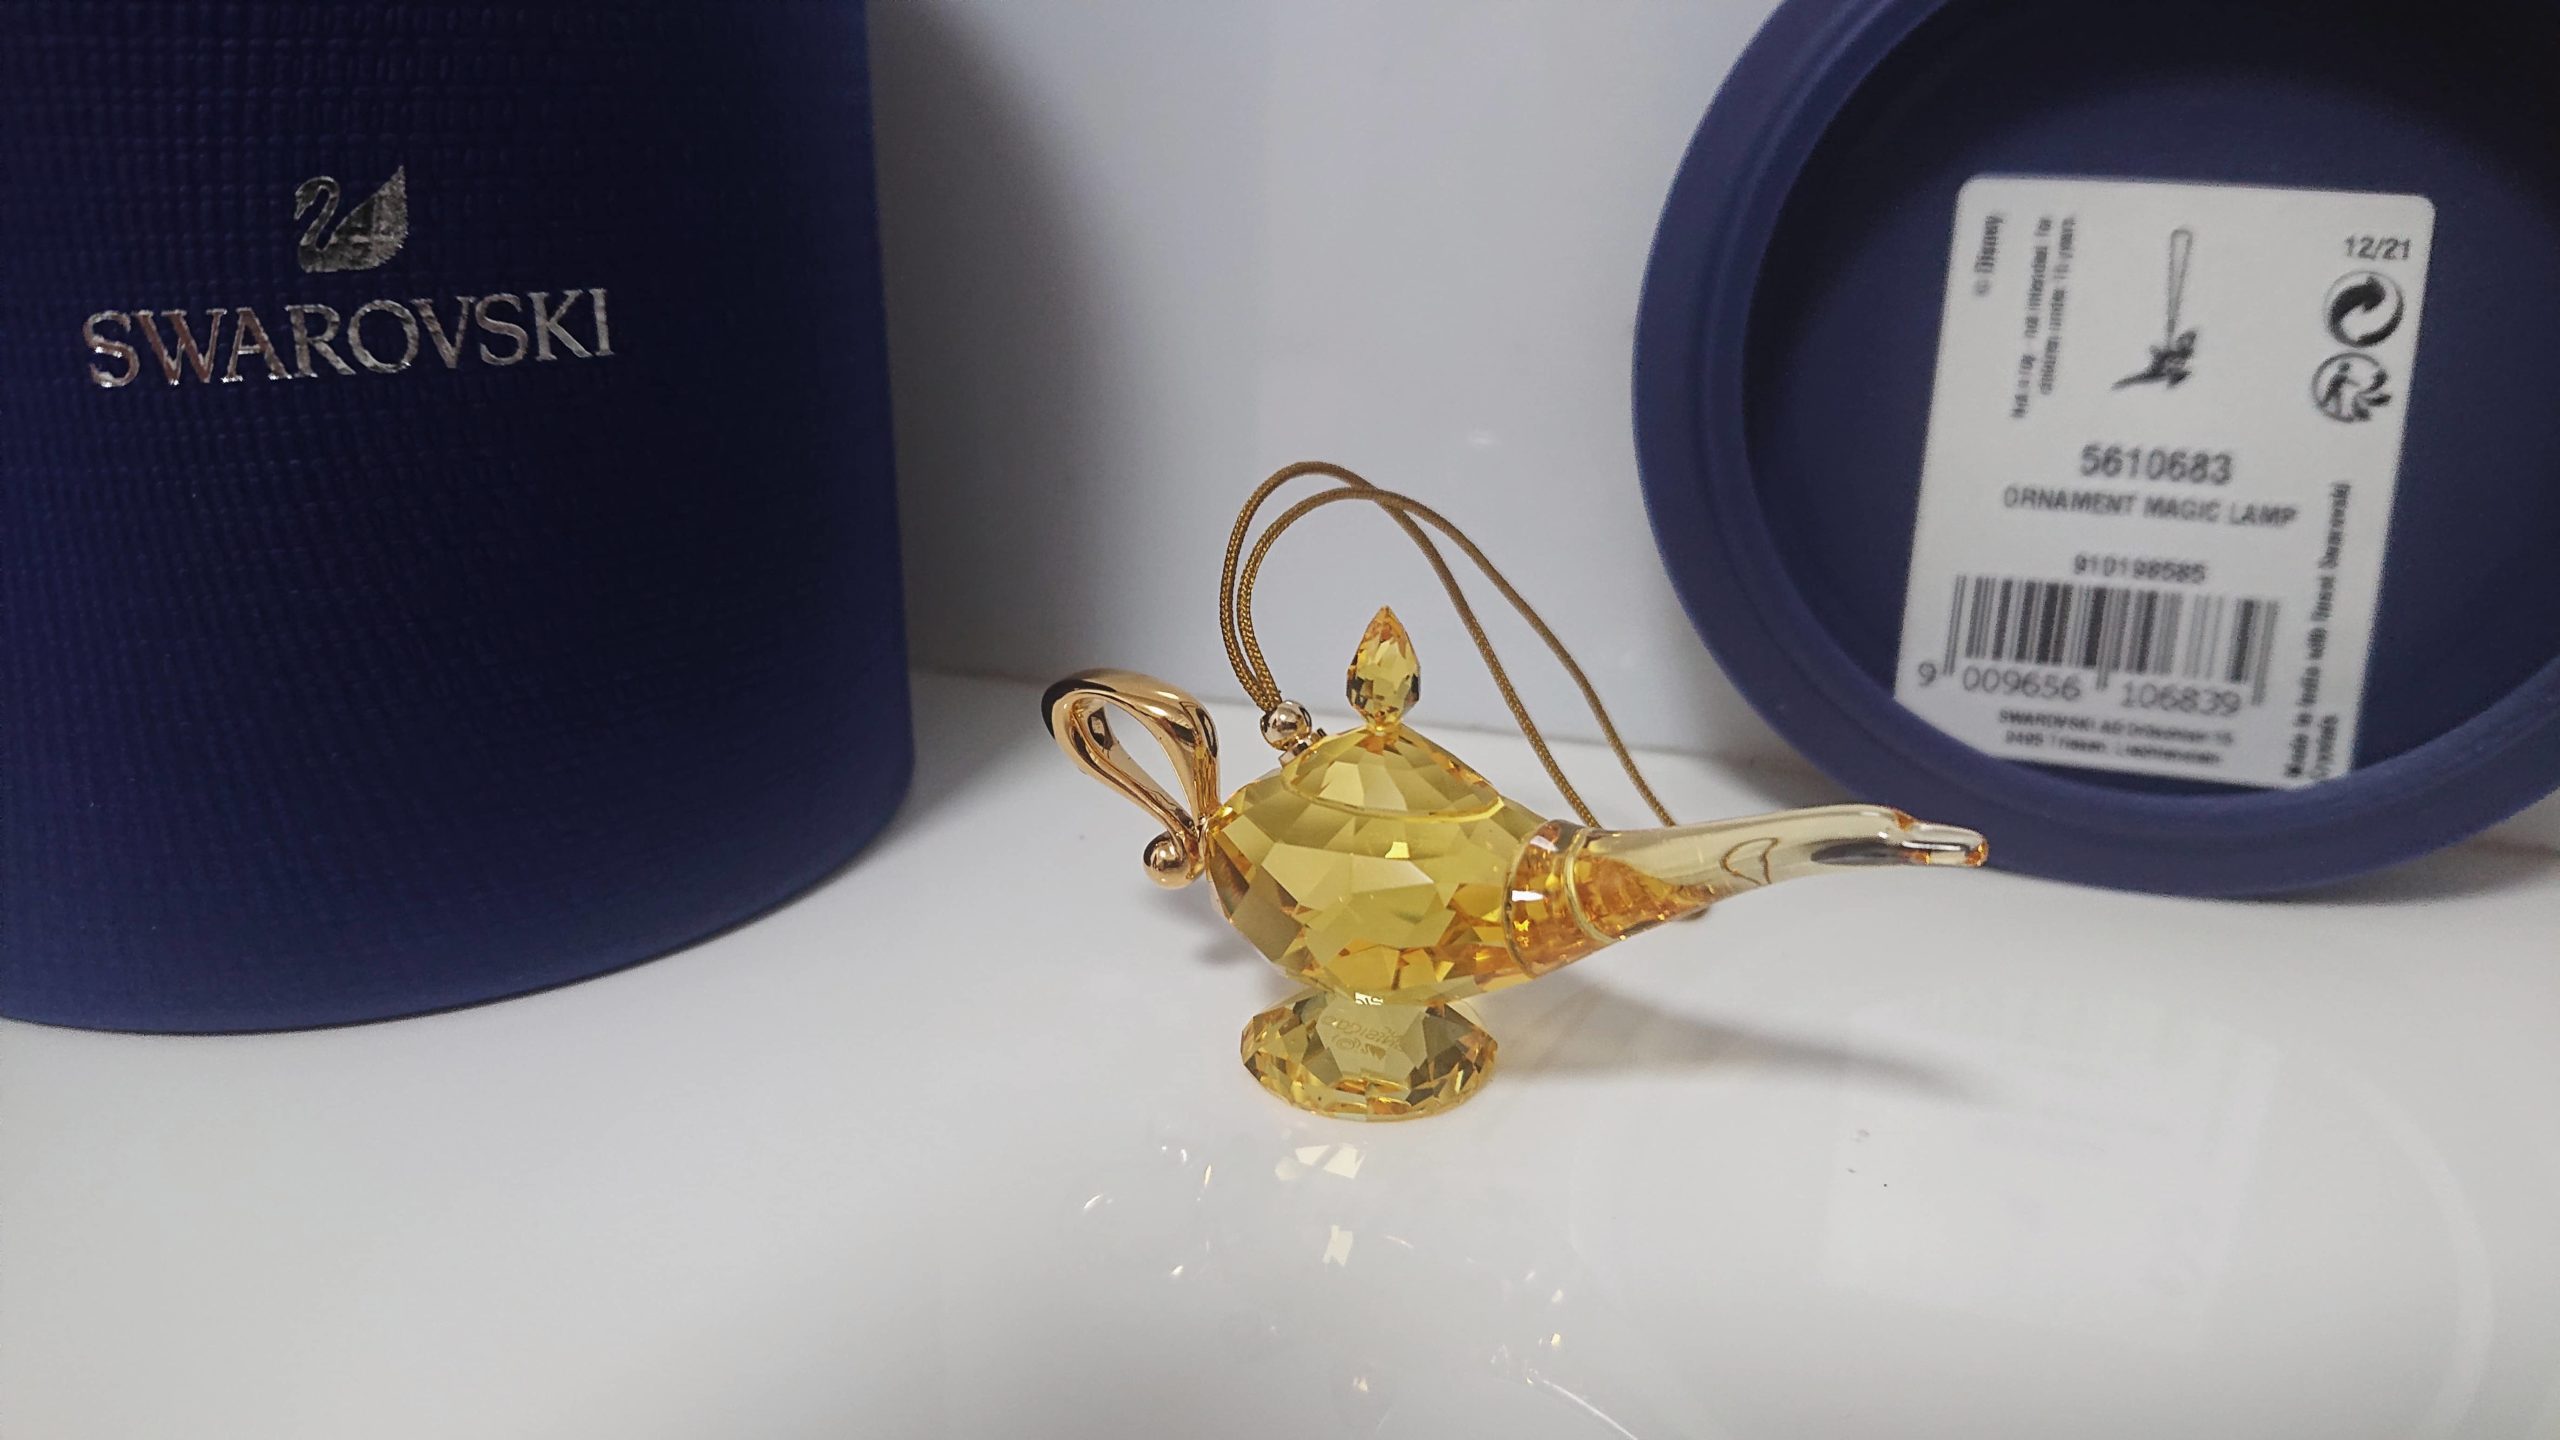 Swarovski Disney Aladdin 5610683 Sammler Ornament - Collectorshop Magic Wunderlampe Lamp